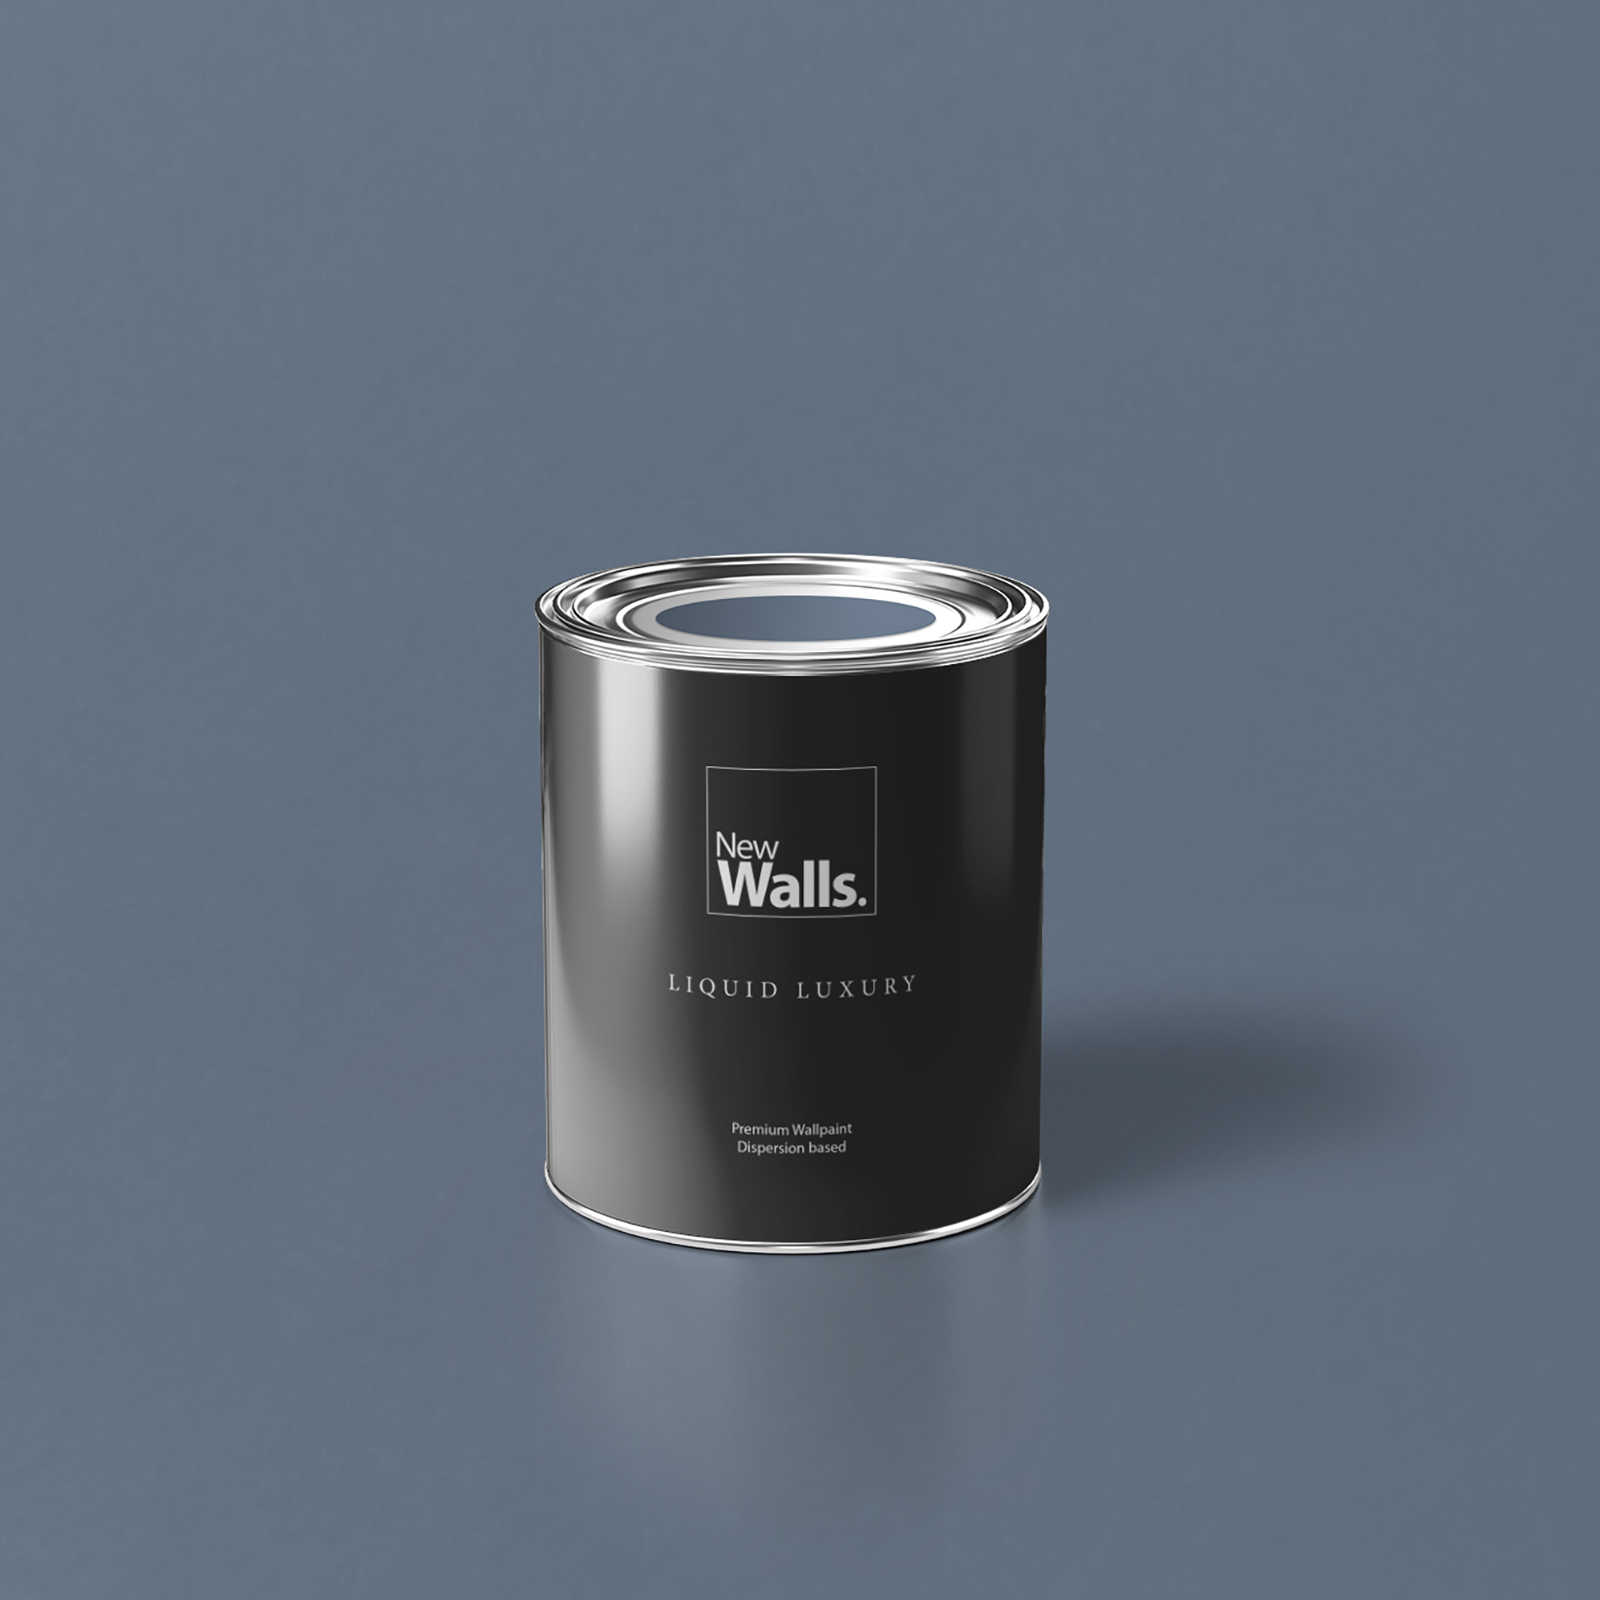         Premium Wall Paint Calm Dove Blue »Blissful Blue« NW307 – 1 litre
    